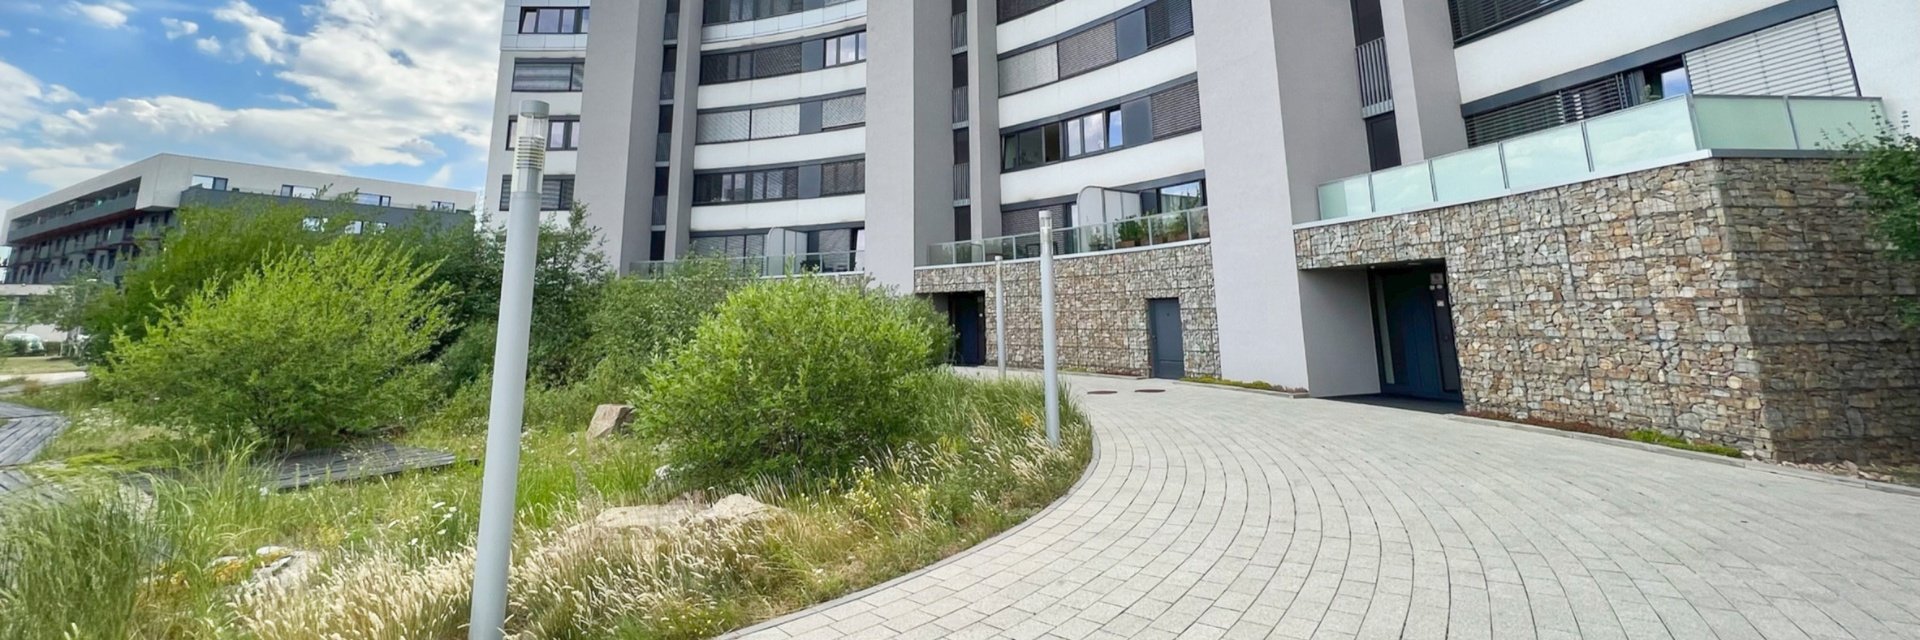 Byt 3+kk s terasou na prodej, 117m² - Brno - Bohunice